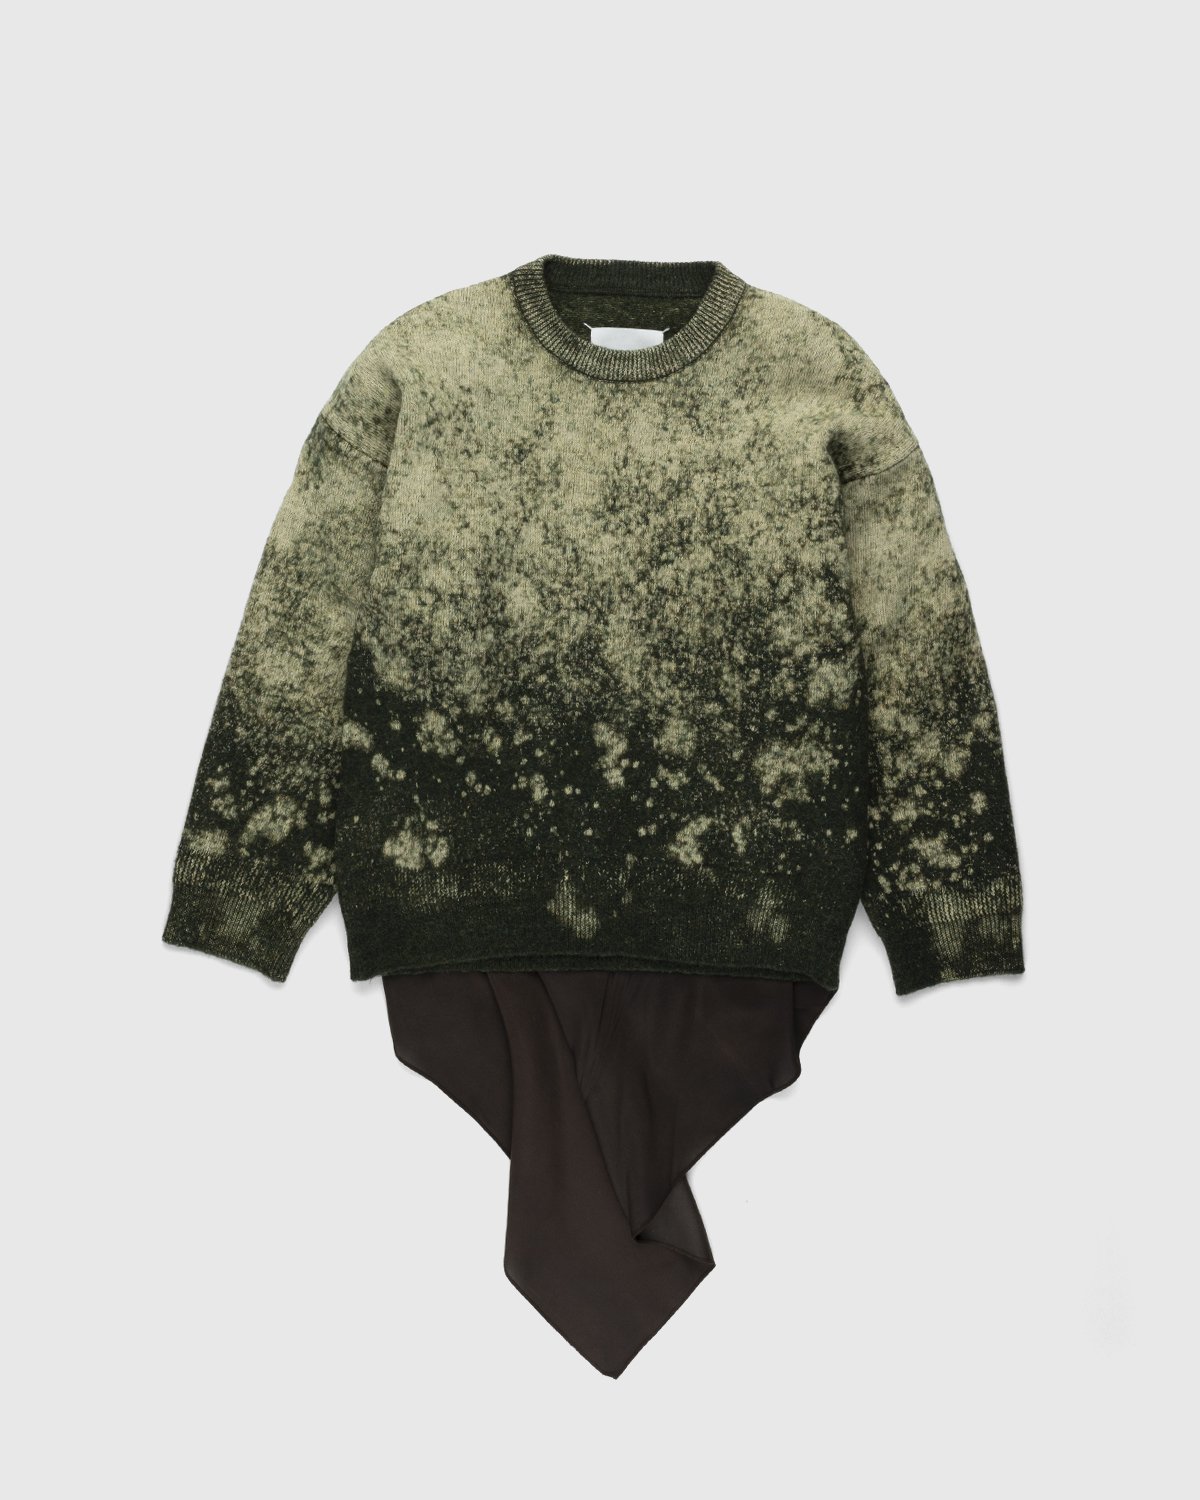 Maison Margiela - Discharged Wool Sweater - Clothing - Green - Image 2